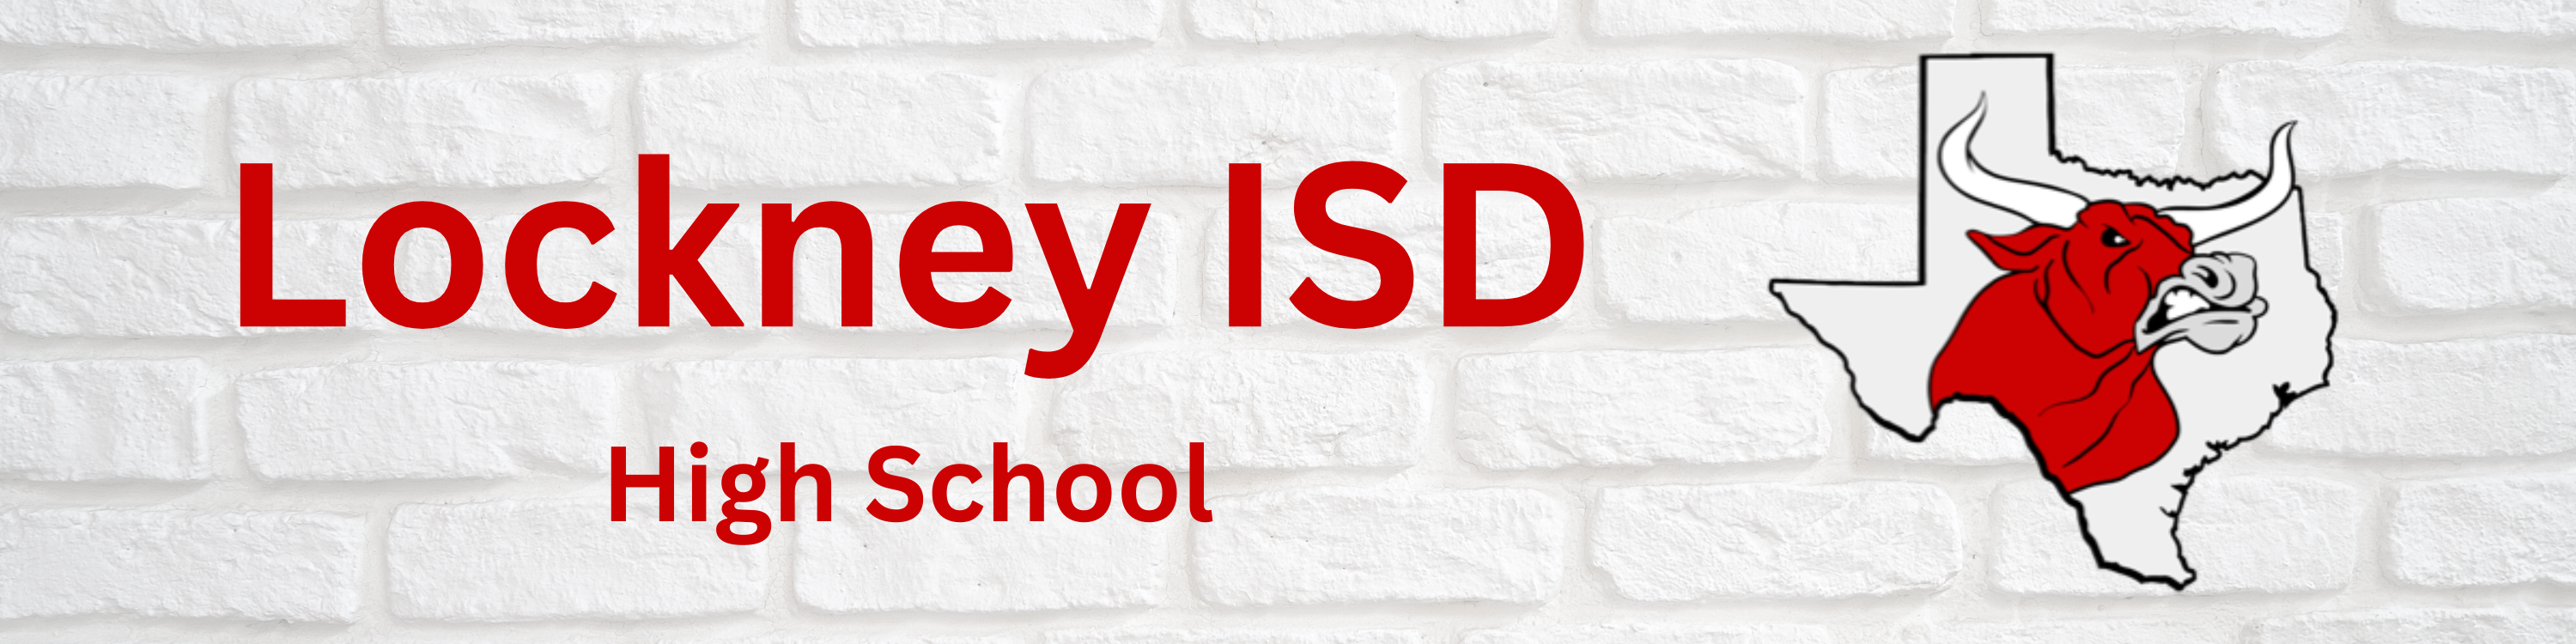 Lockney ISD High School